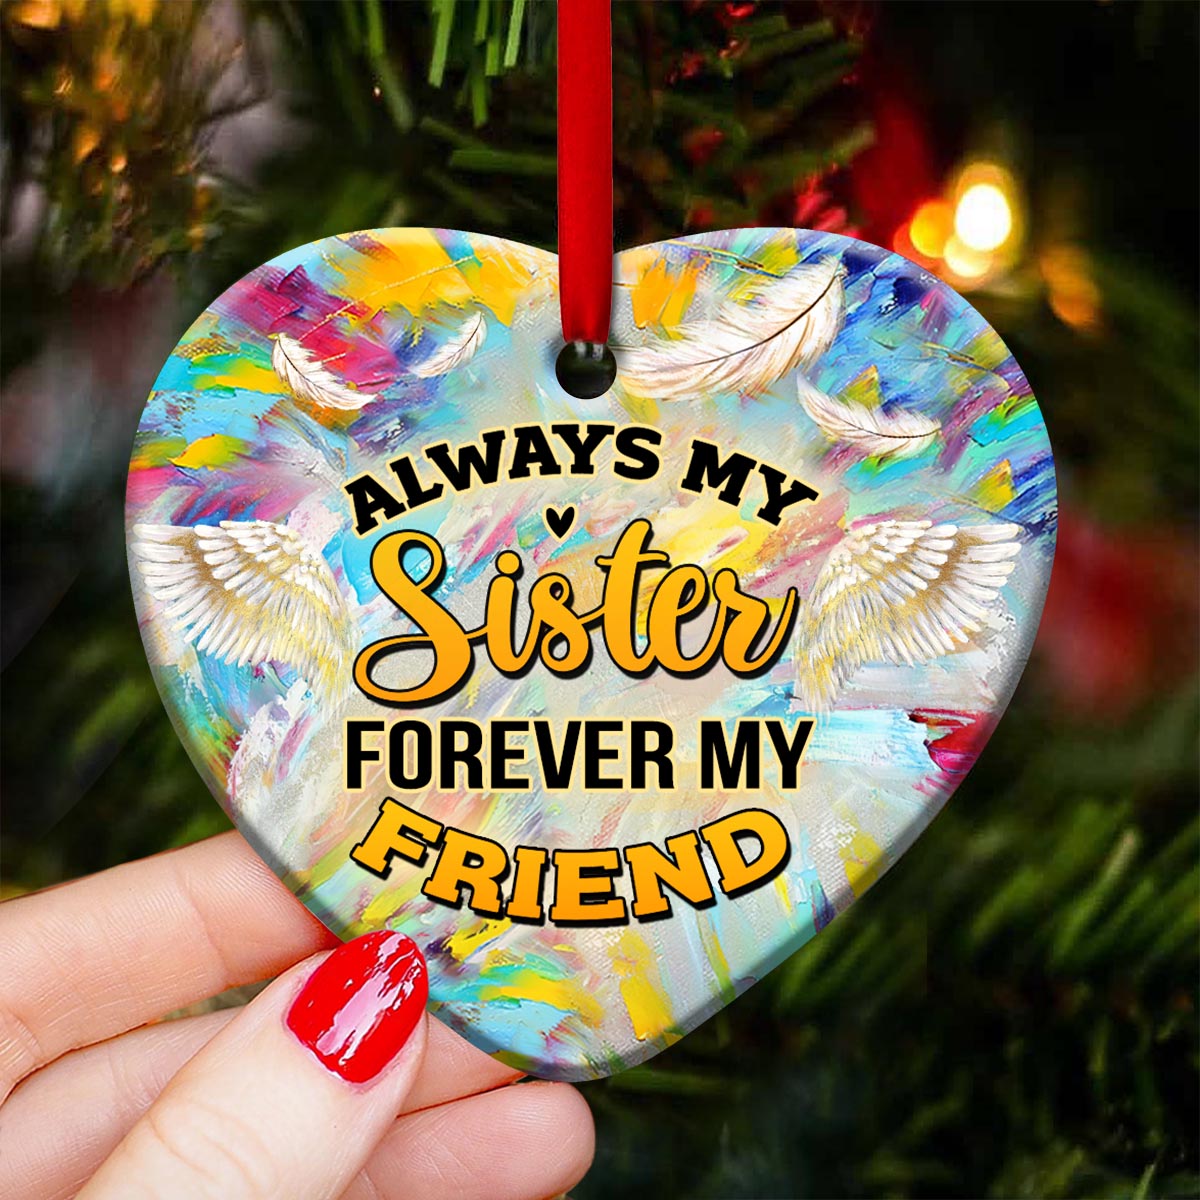 Sister Angel Always My Sister Forever My Friend Heart Ceramic Ornament - Christmas Ornament - Christmas Gift